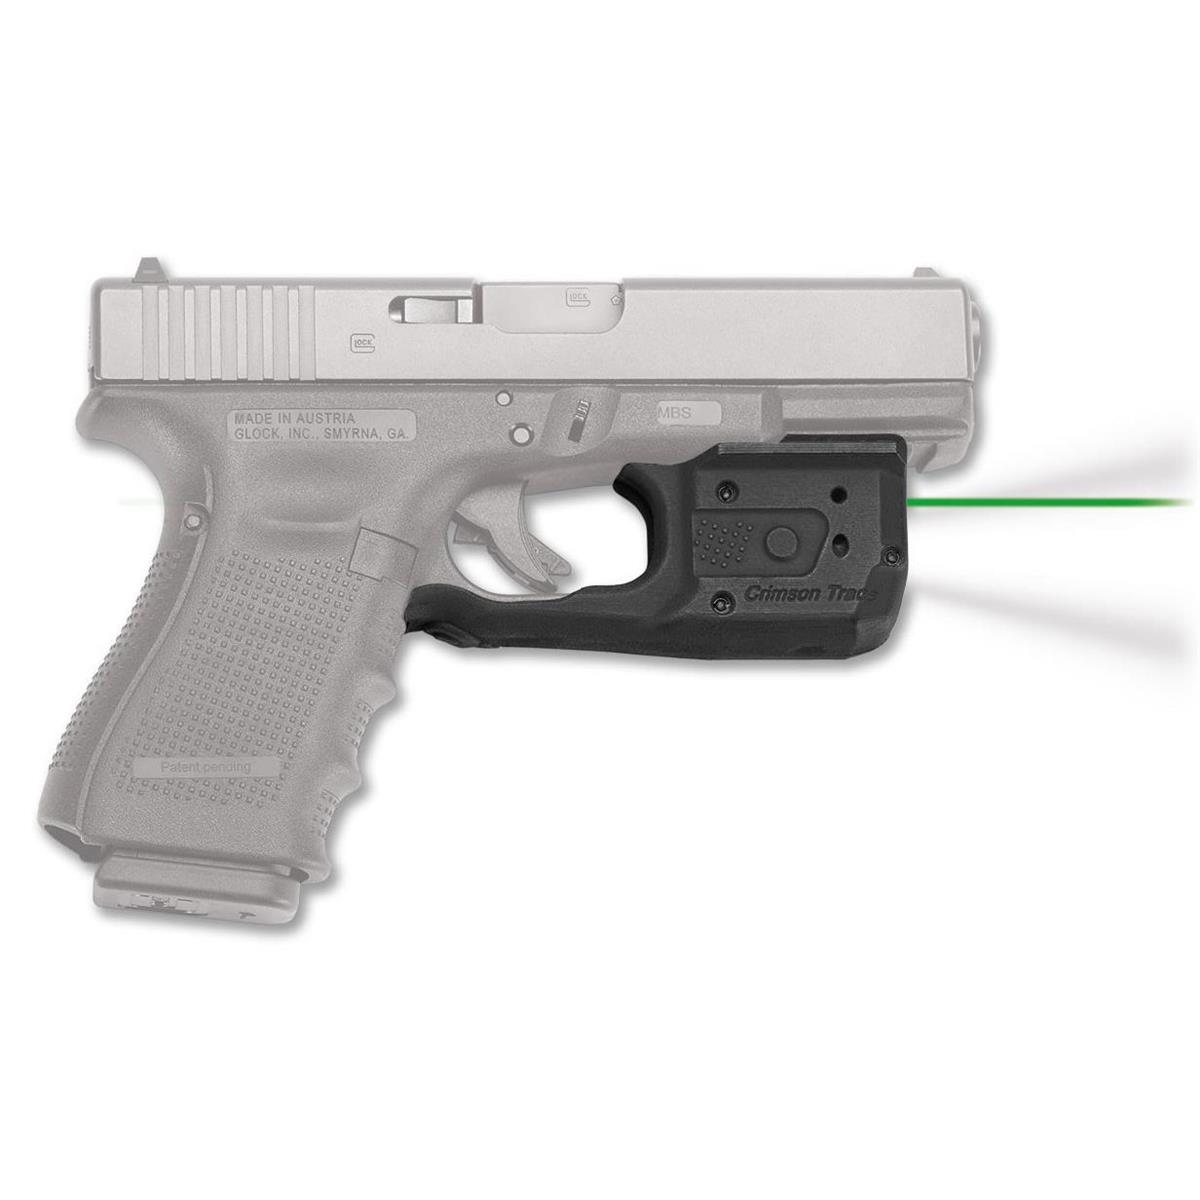 Crimson Trace LaserGuard Pro Green Laser Sight & Light for Glock Subcompacts -  LL-810G